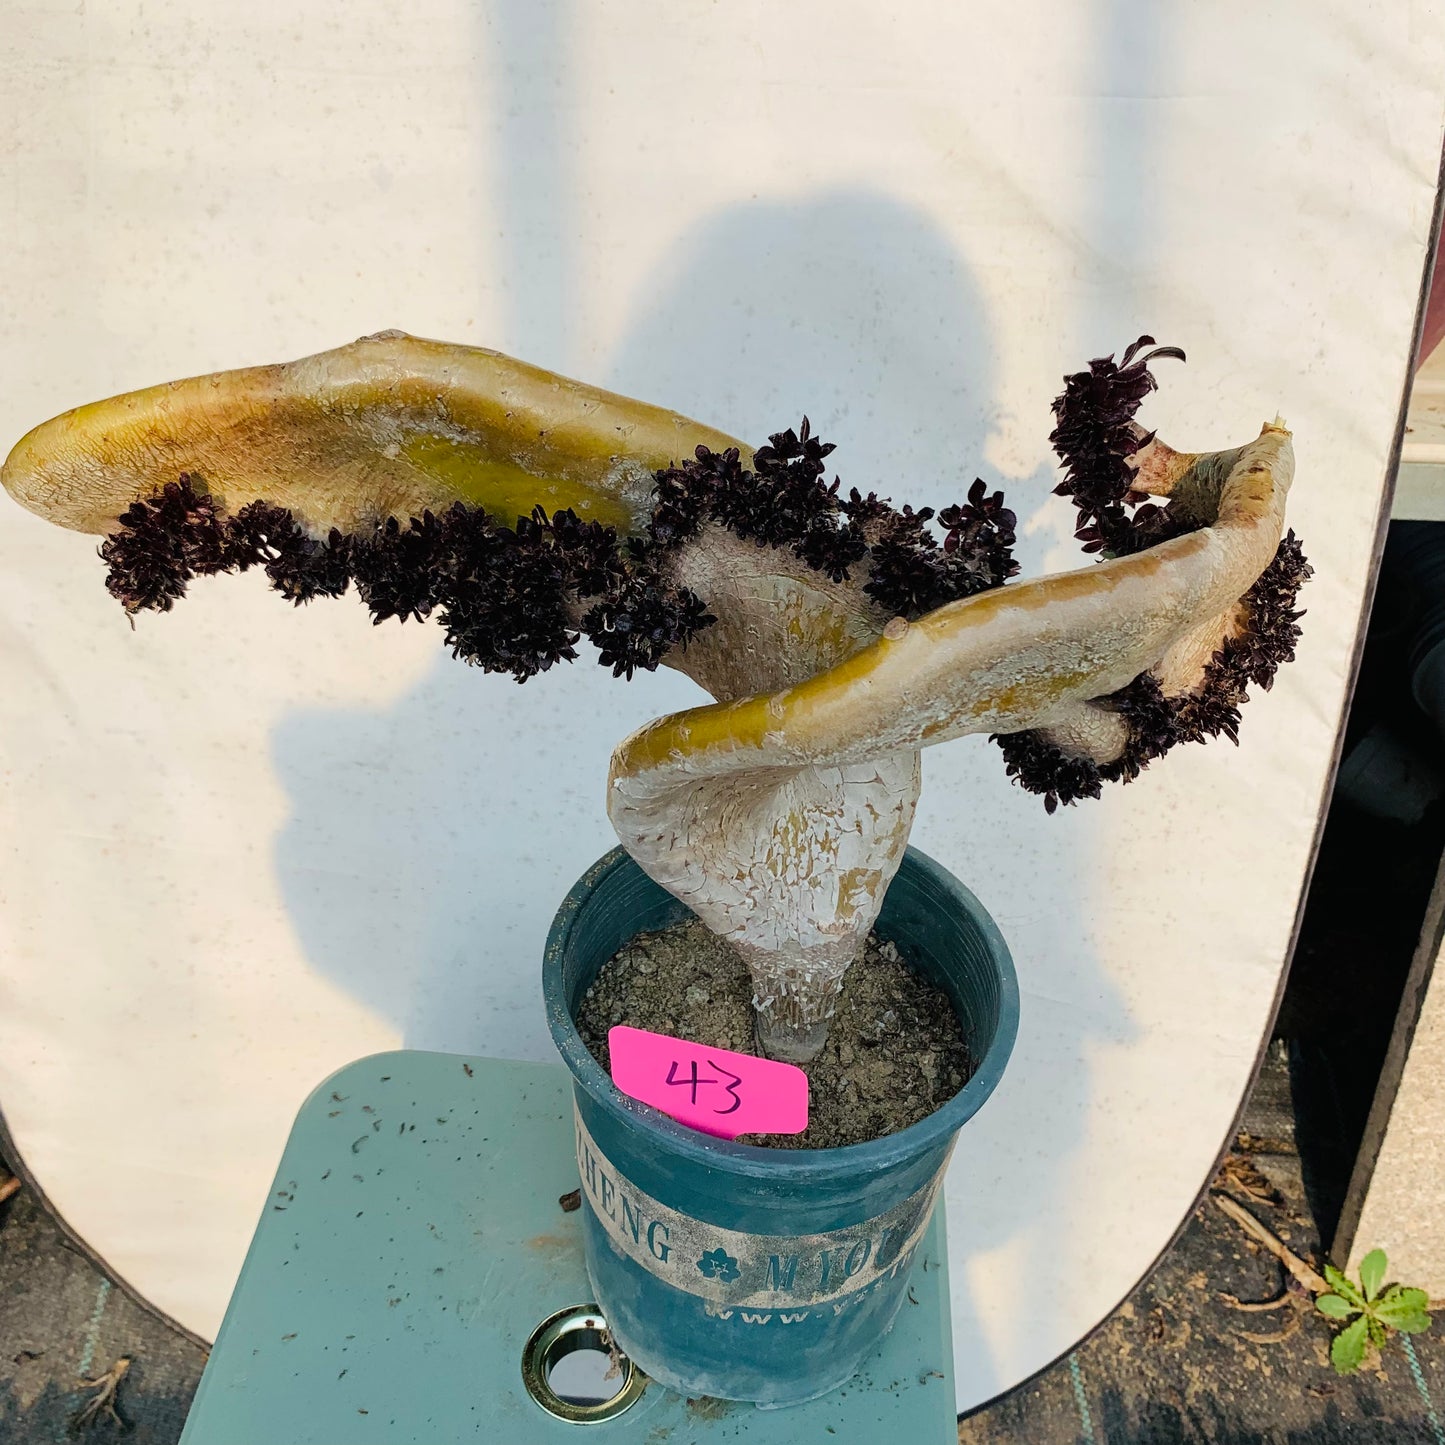 Black mage crested 37cm has roots/Aeonium Affix / Variegated Natural Live Plants Succulents